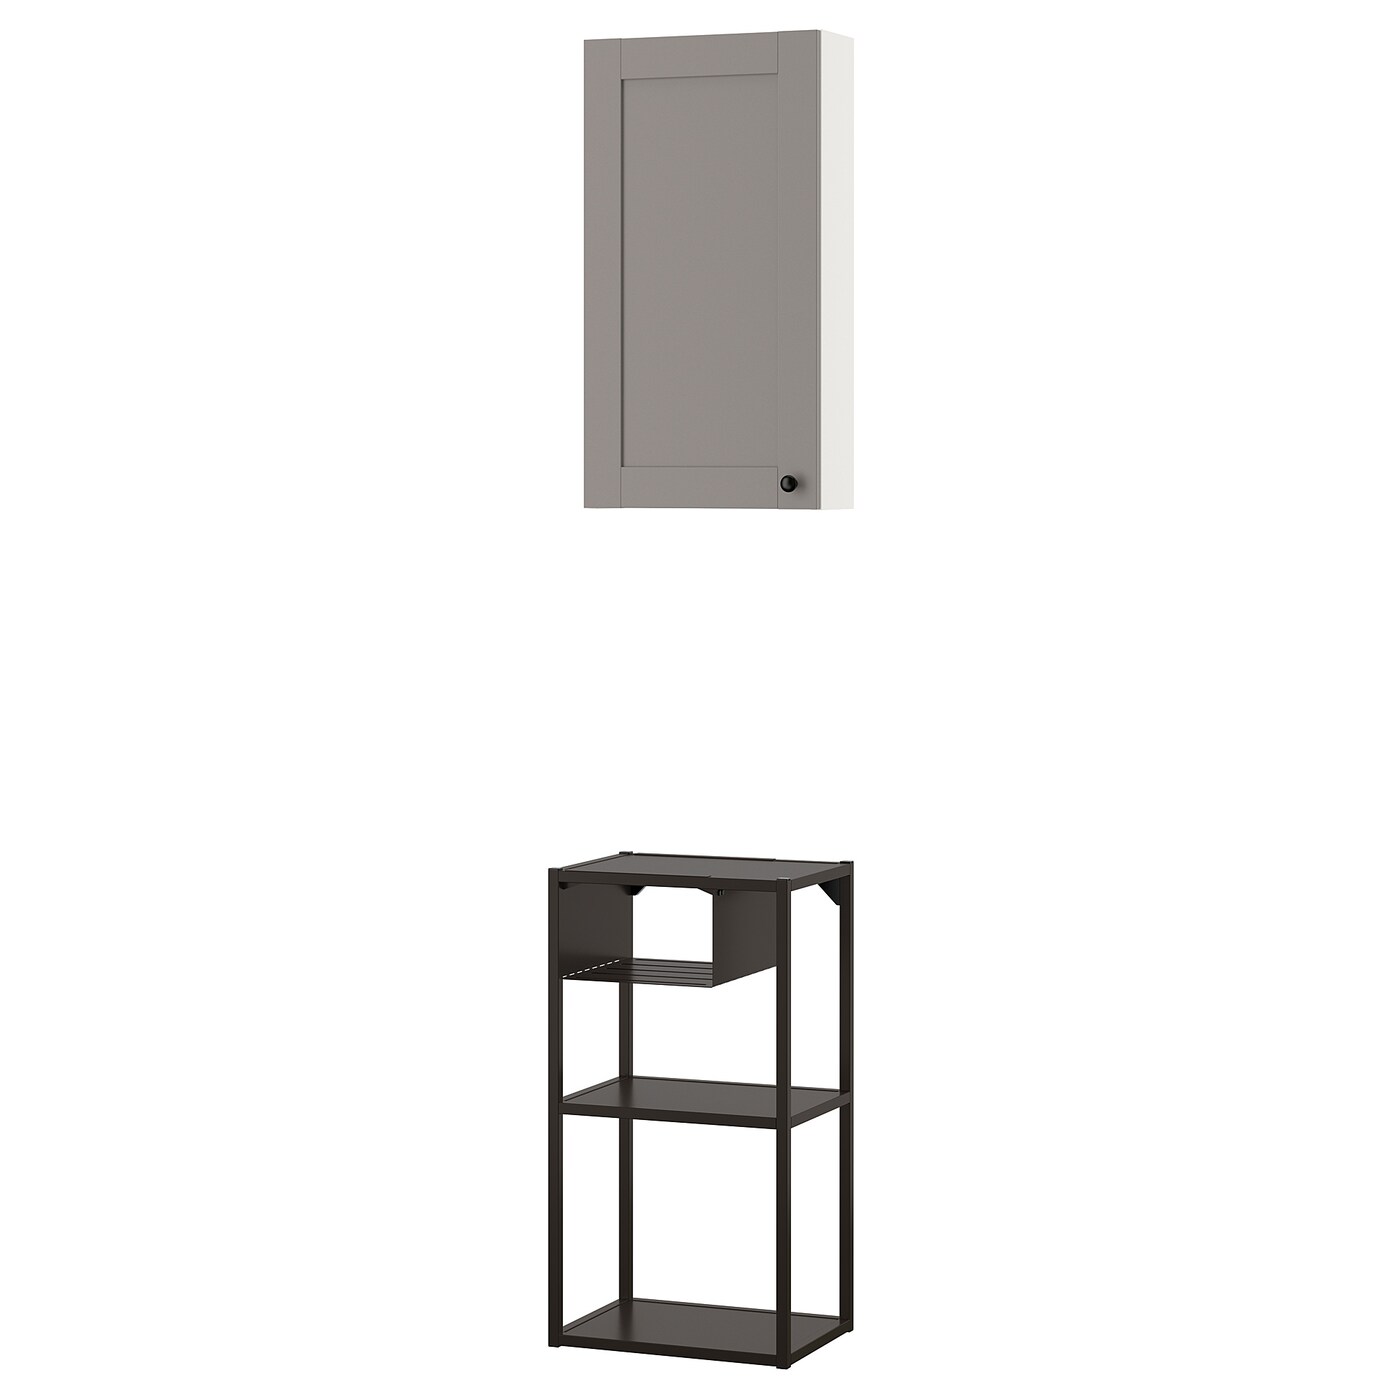 Комбинация для хранения - IKEA ENHET/ЭНХЕТ ИКЕА, 40х30х150 см, антрацит/бело-серый